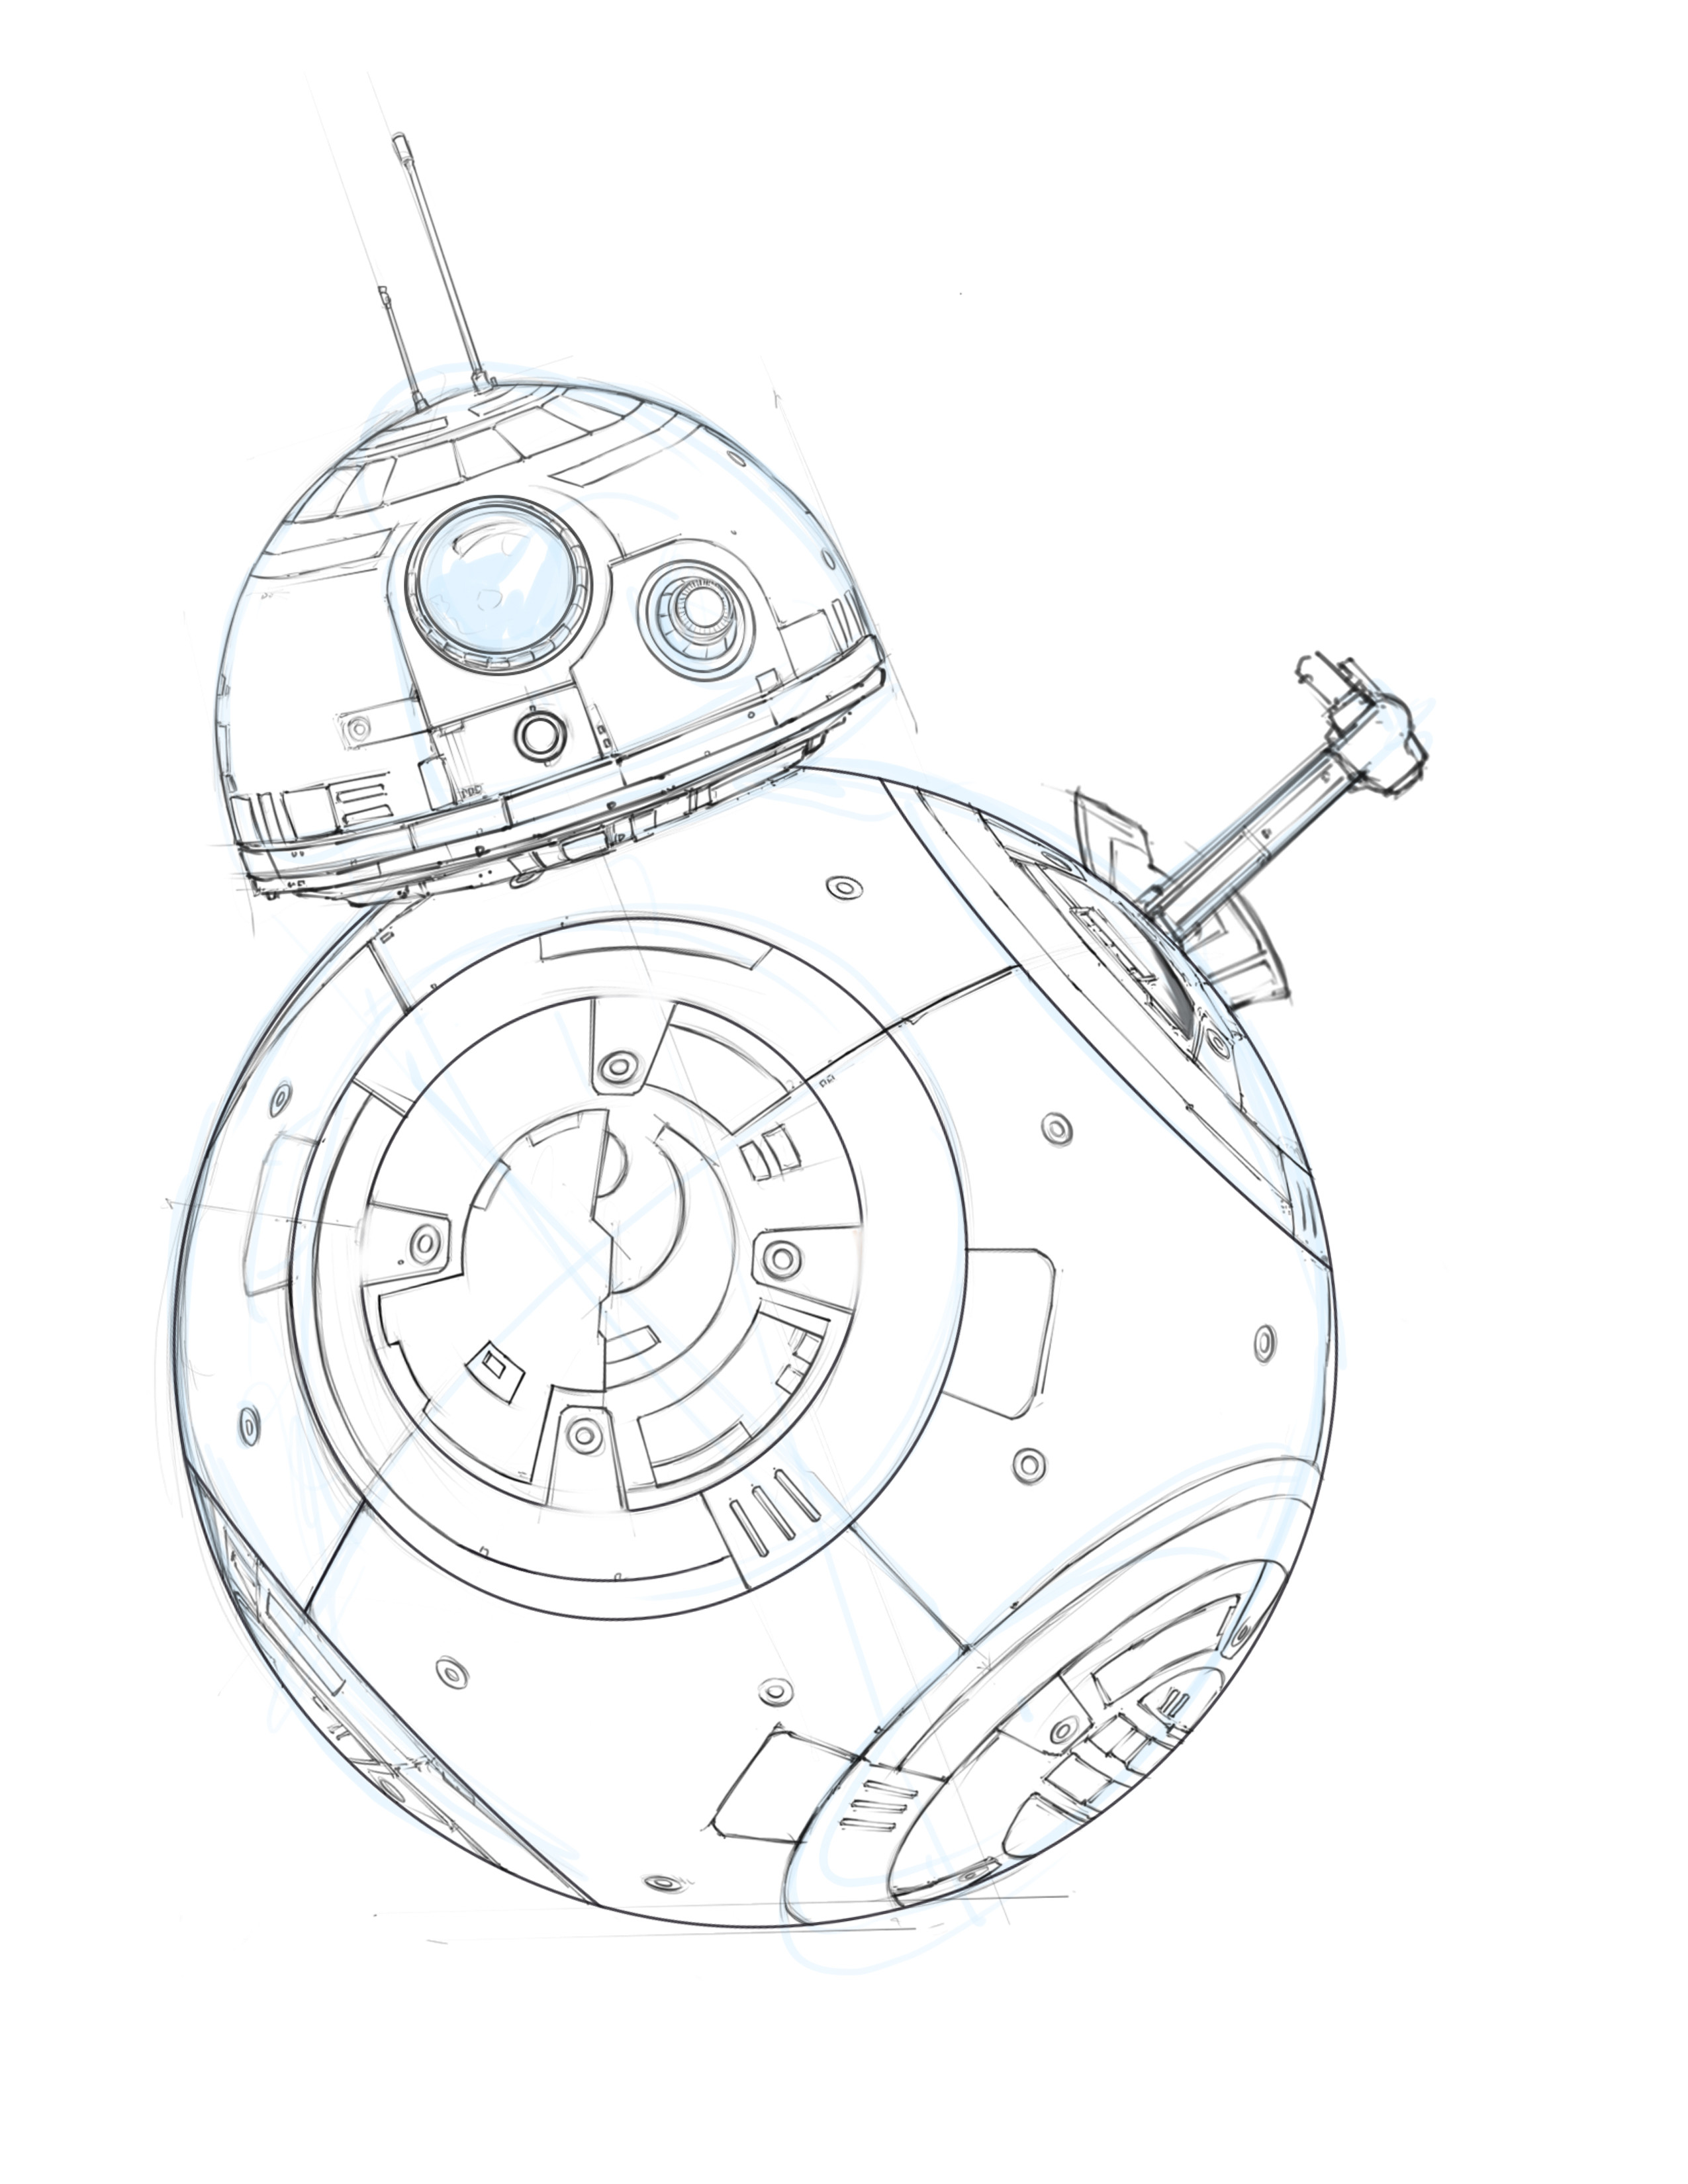 BB-8 Droid Sketch